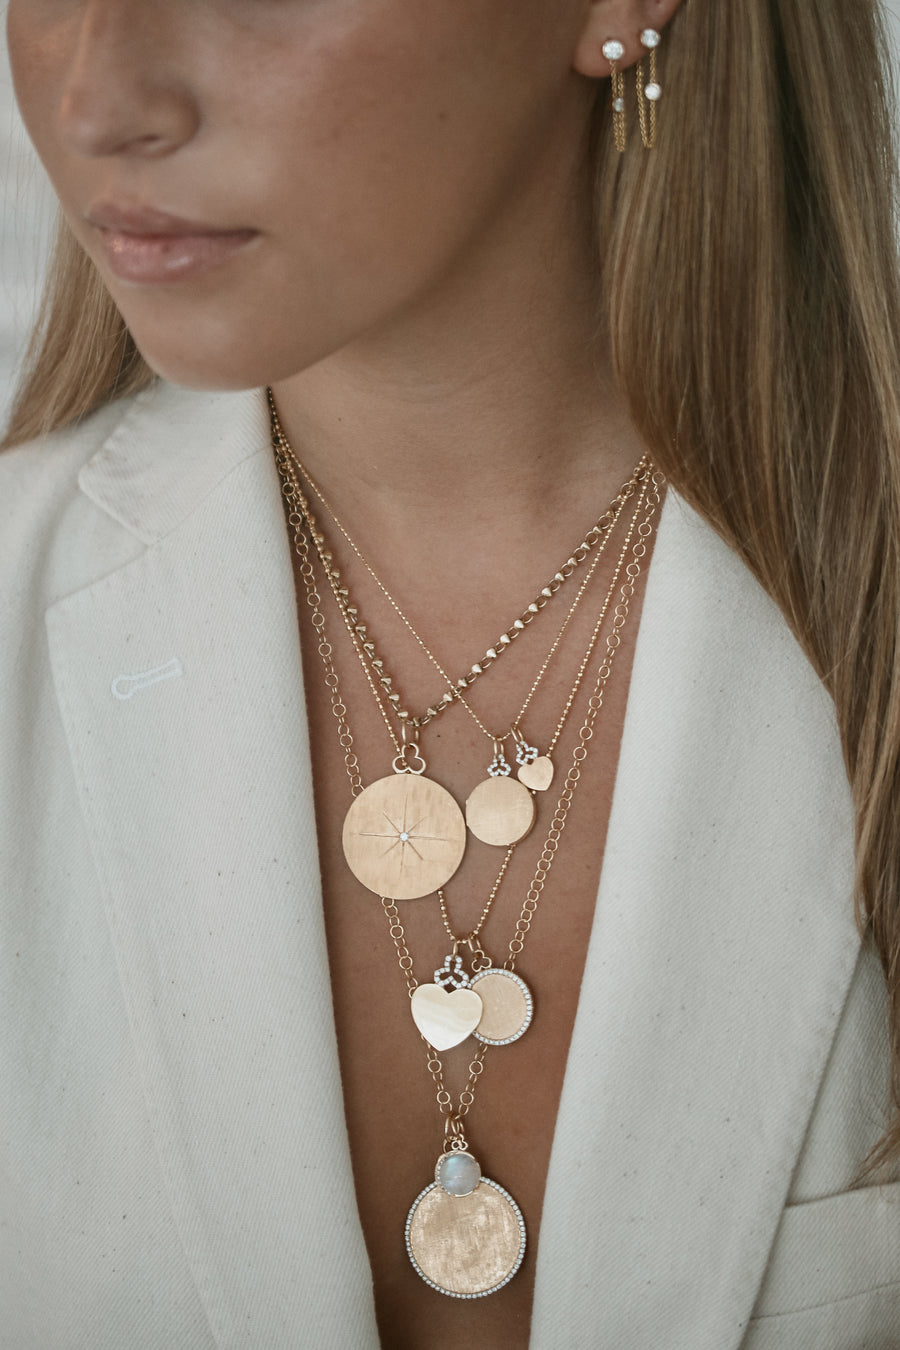 18k gold round locket necklace with north star symbol